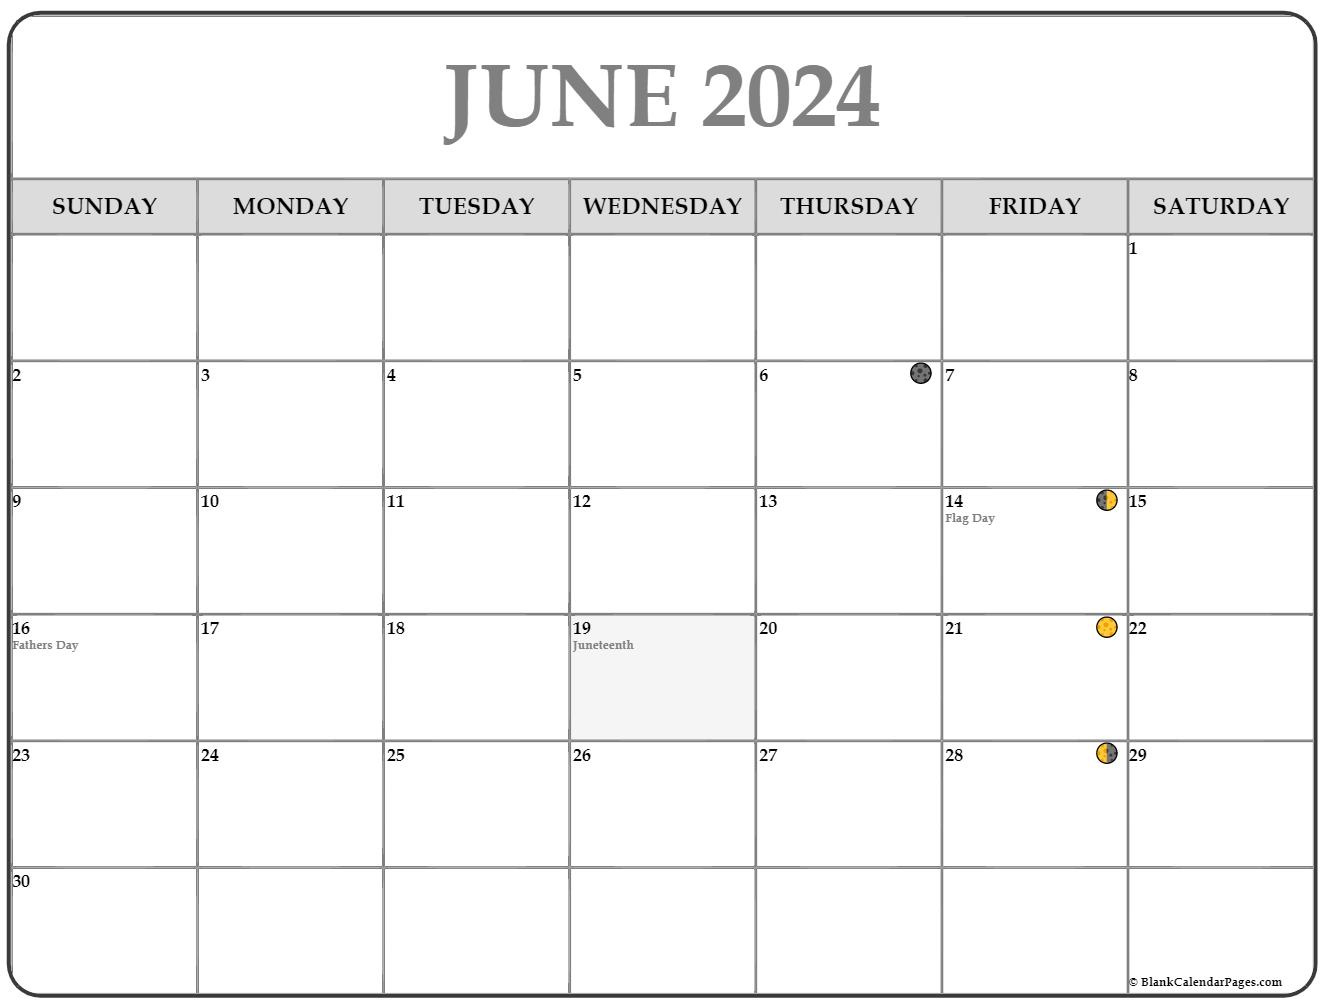 June 2024 Lunar Calendar | Moon Phase Calendar within June 2024 Moon Phase Calendar